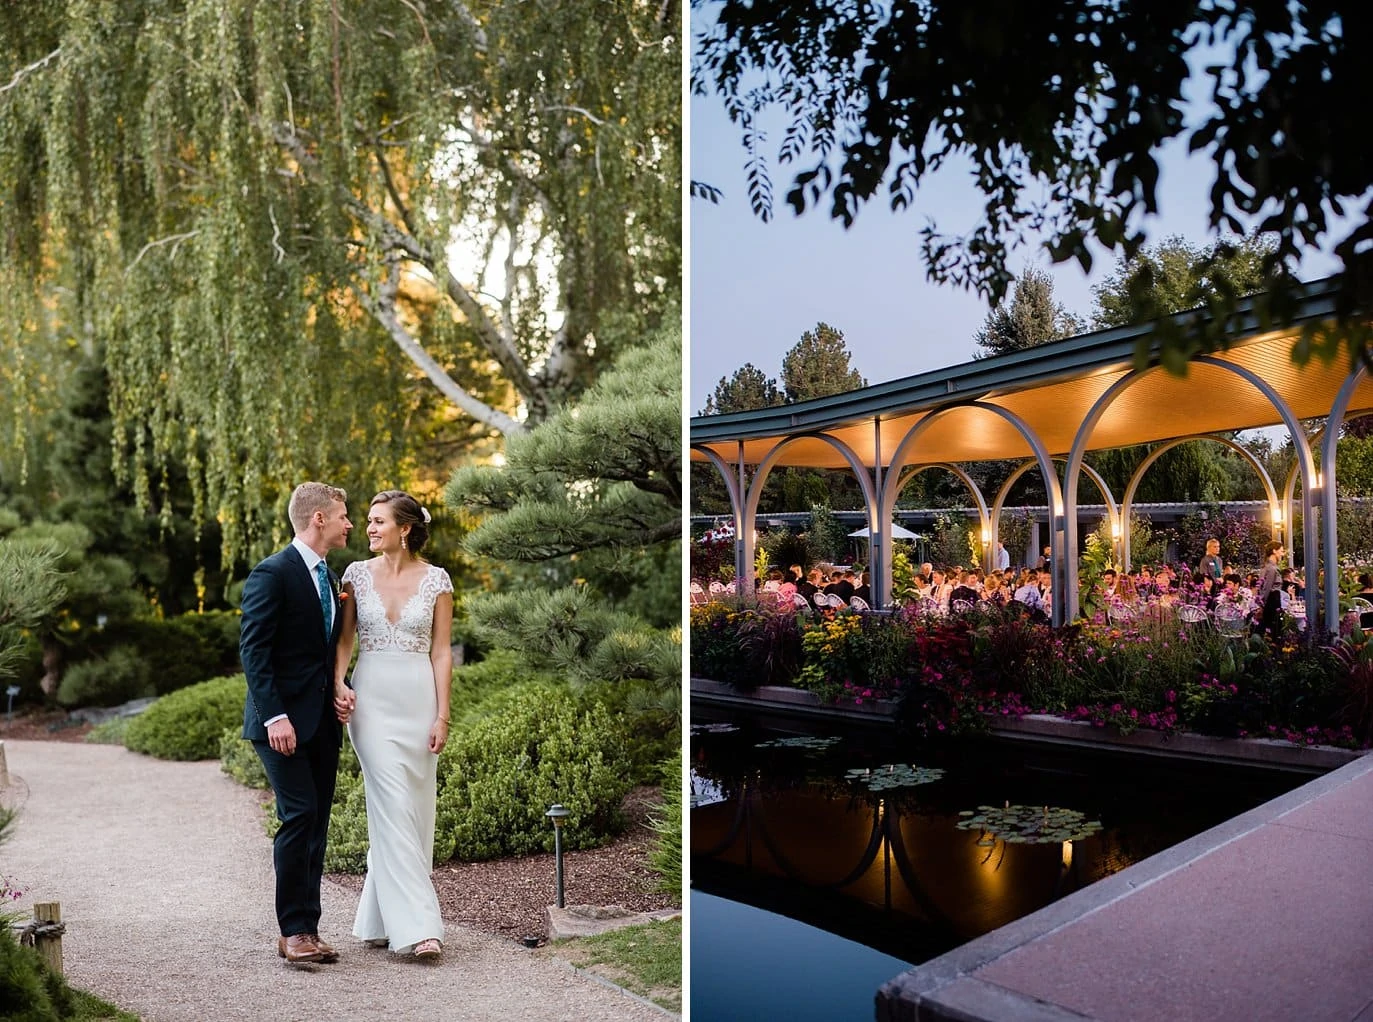 the Annuals Pavilion twilight al fresco dinner at Denver Botanic Gardens wedding by Denver Wedding Photographer Jennie Crate